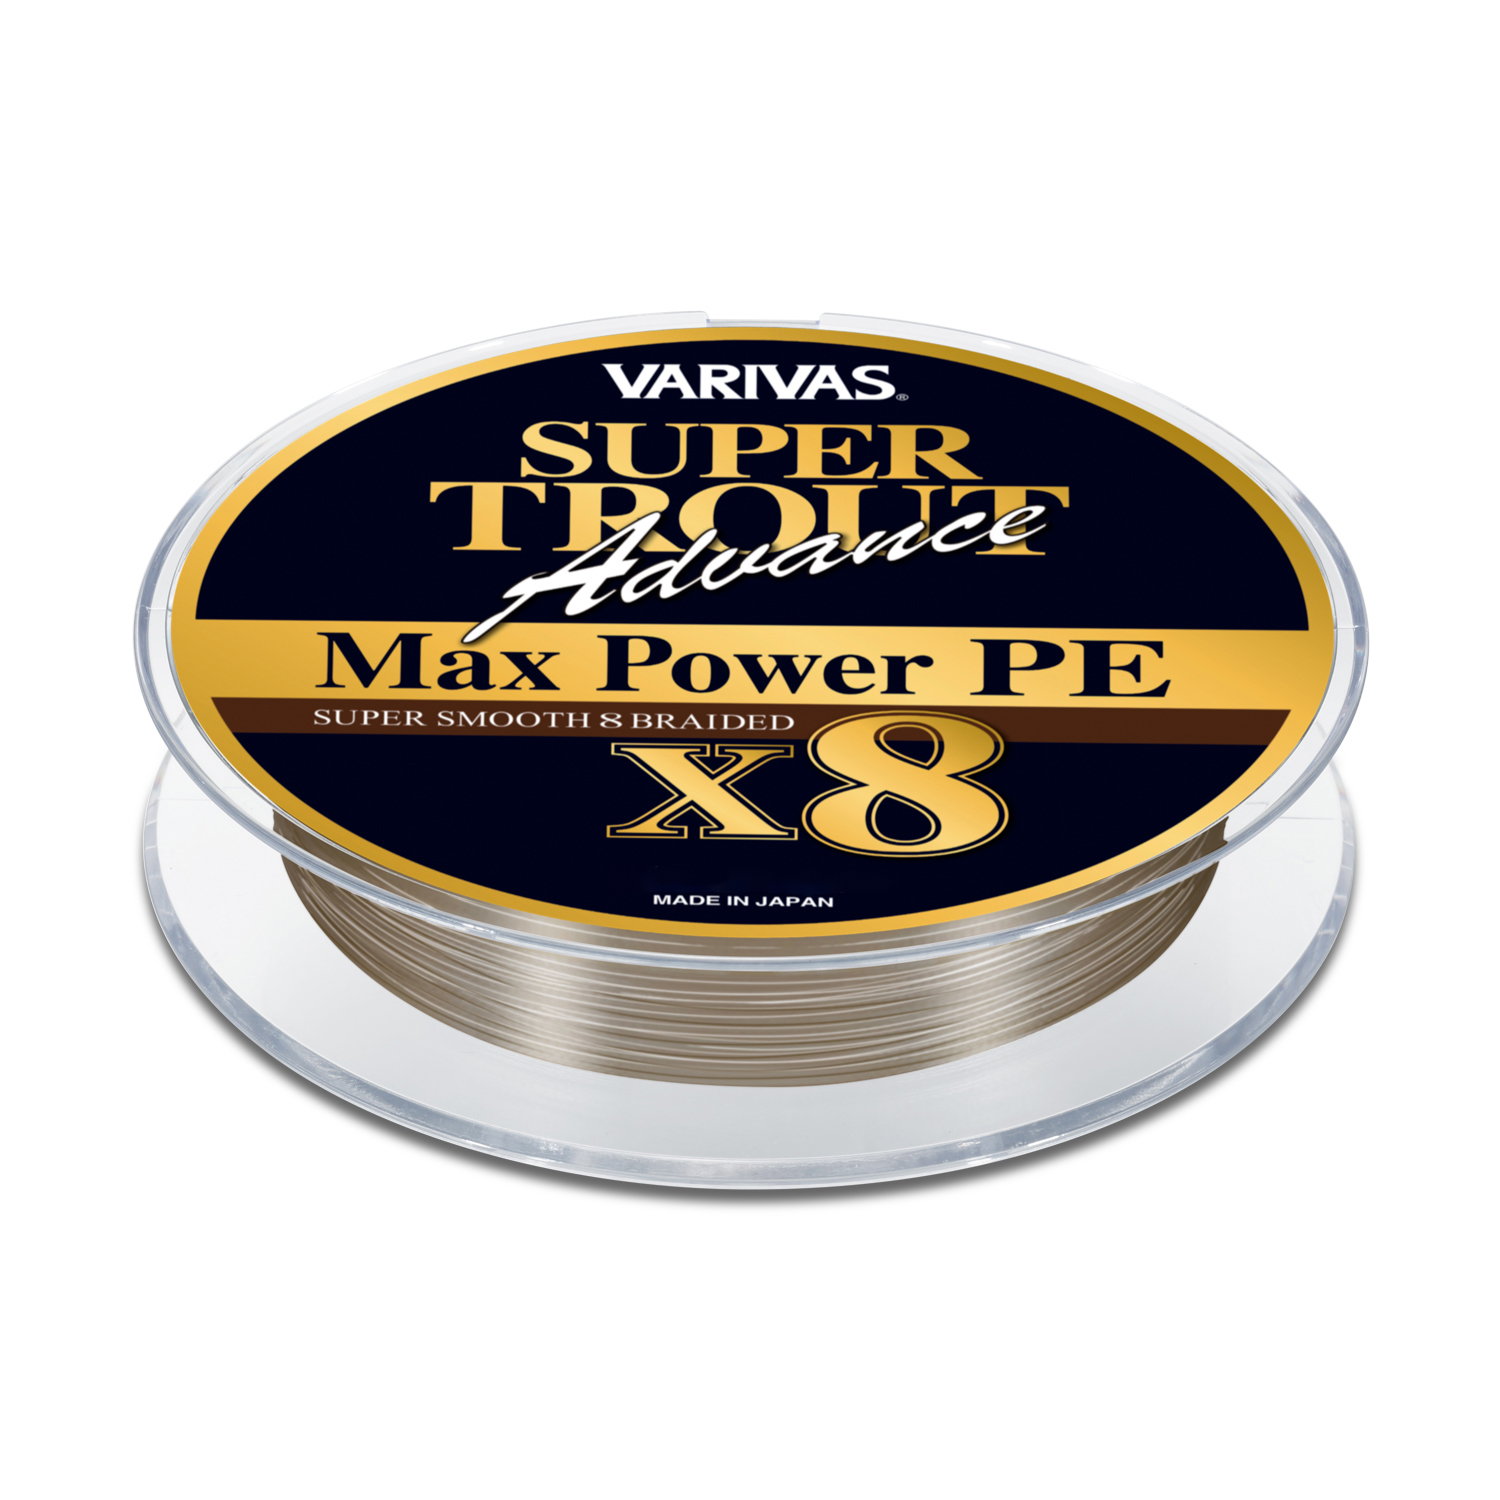 Super Trout Advance[Max Power PE] X8